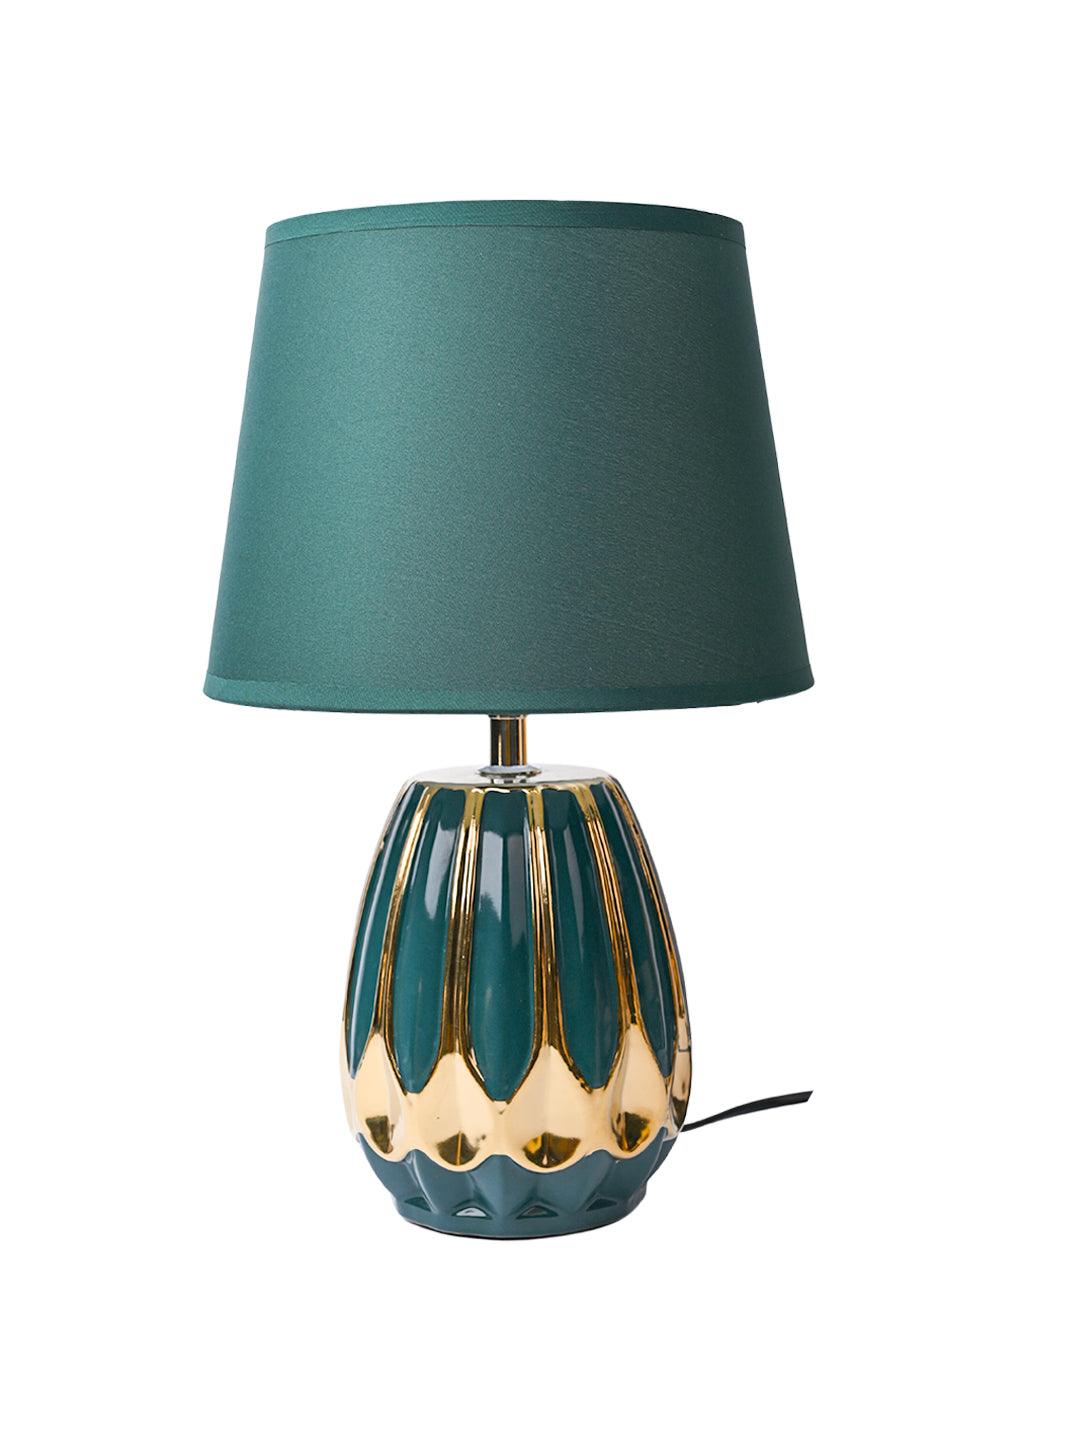 Stylish Green Shade Table Lamp - MARKET99